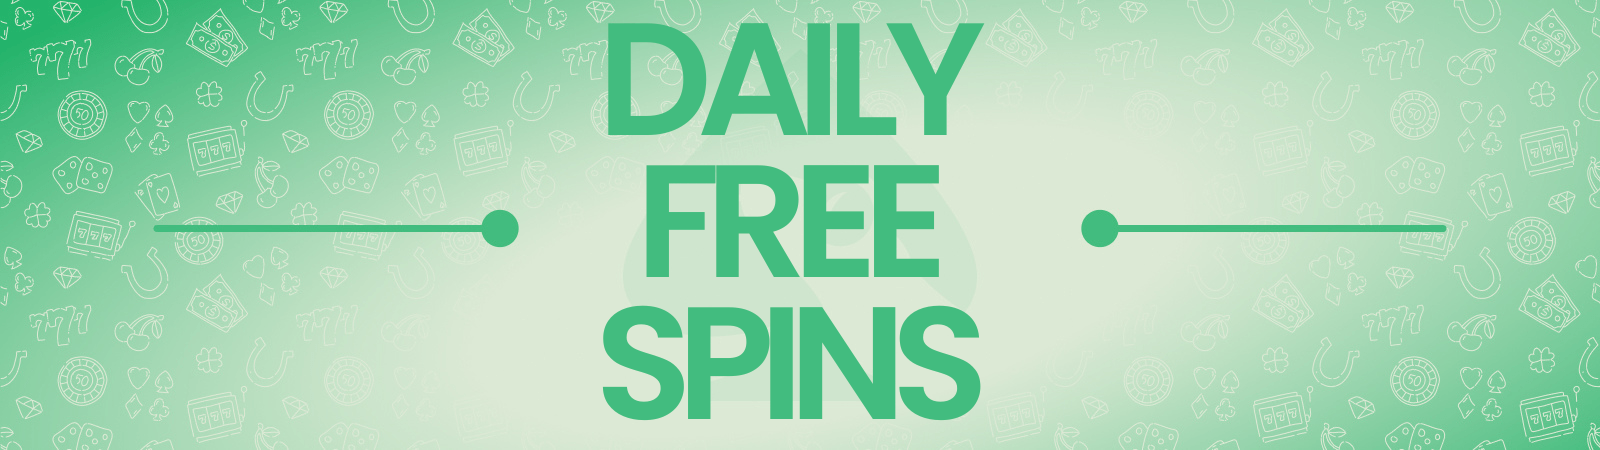 daily free spins no deposit uk